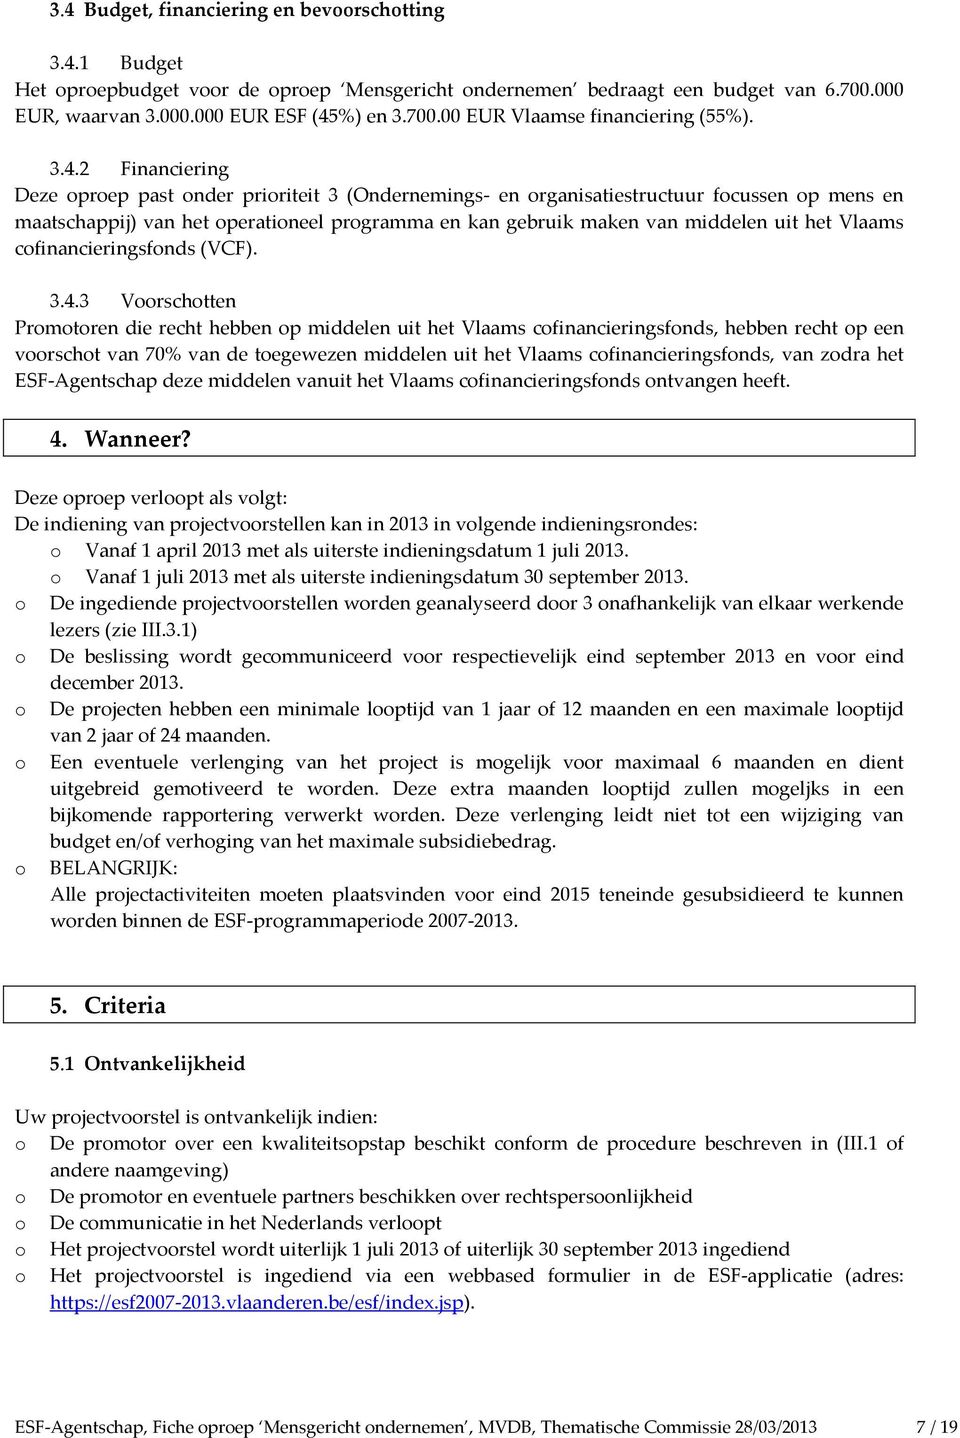 het Vlaams cofinancieringsfonds (VCF). 3.4.